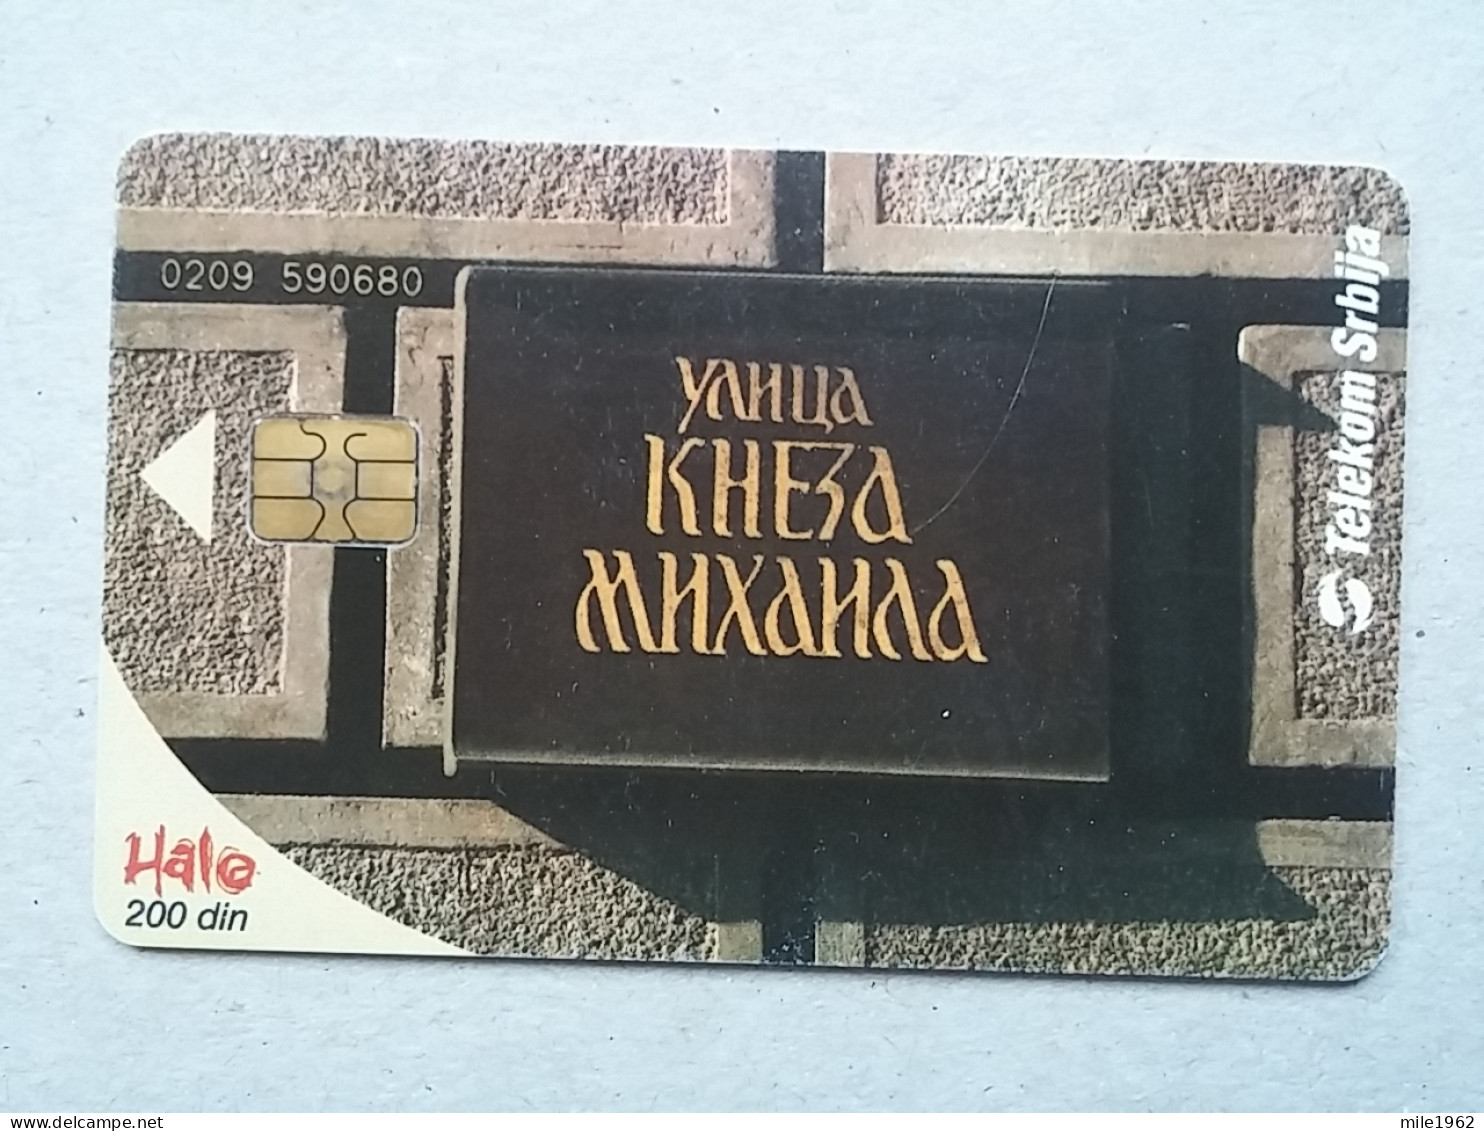 T-576 - SERBIA, Telecard, Télécarte, Phonecard,  - Jugoslavia